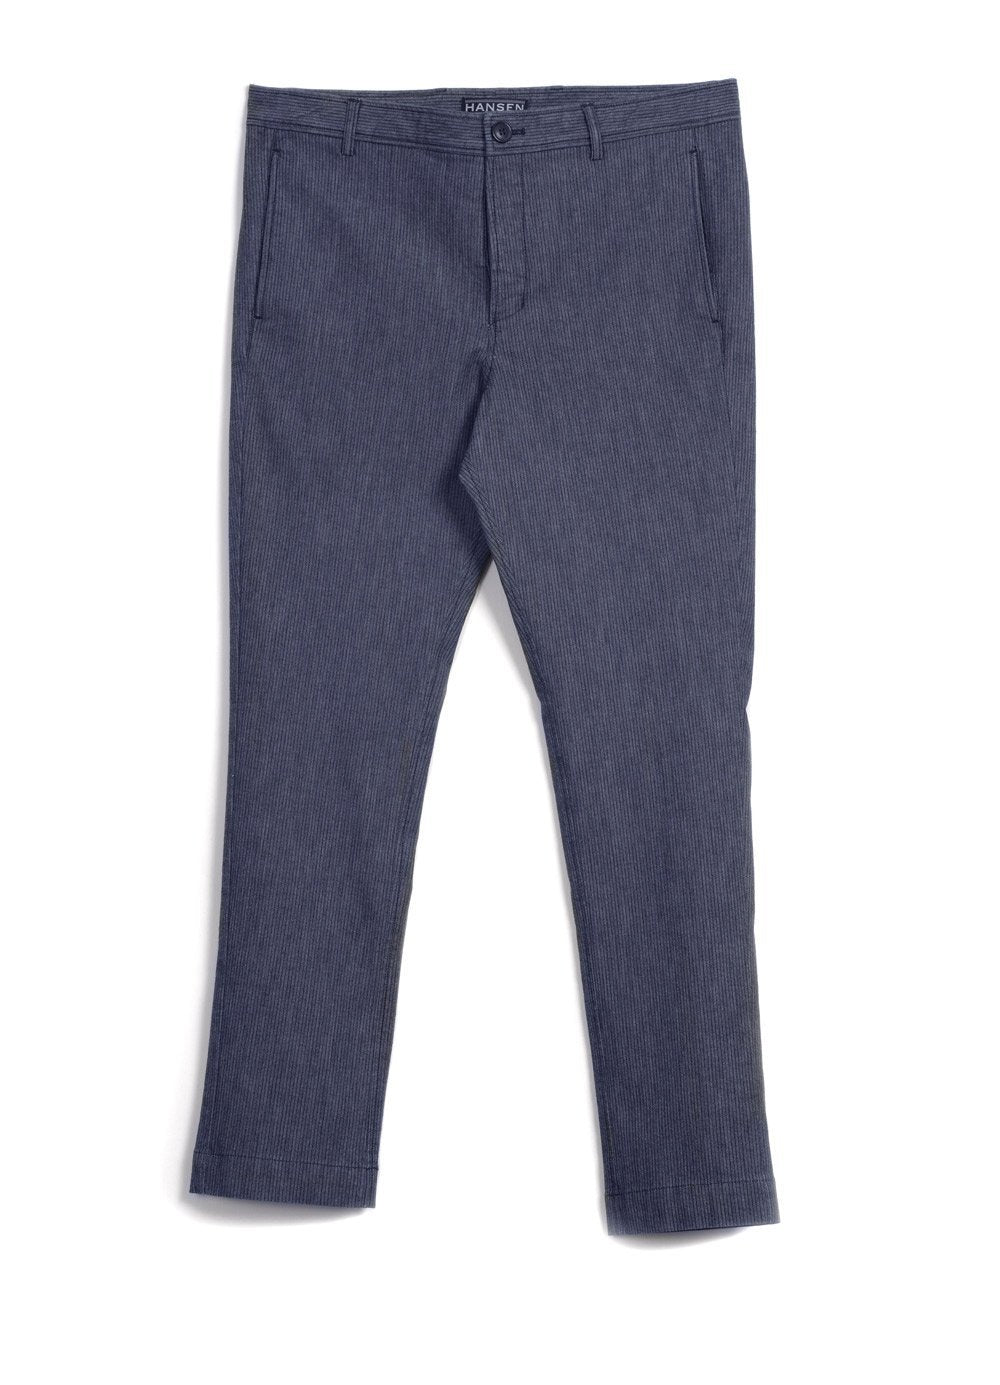 IVAN | Slim Fit Trousers | Indigostripe | €200 -HANSEN Garments- HANSEN Garments